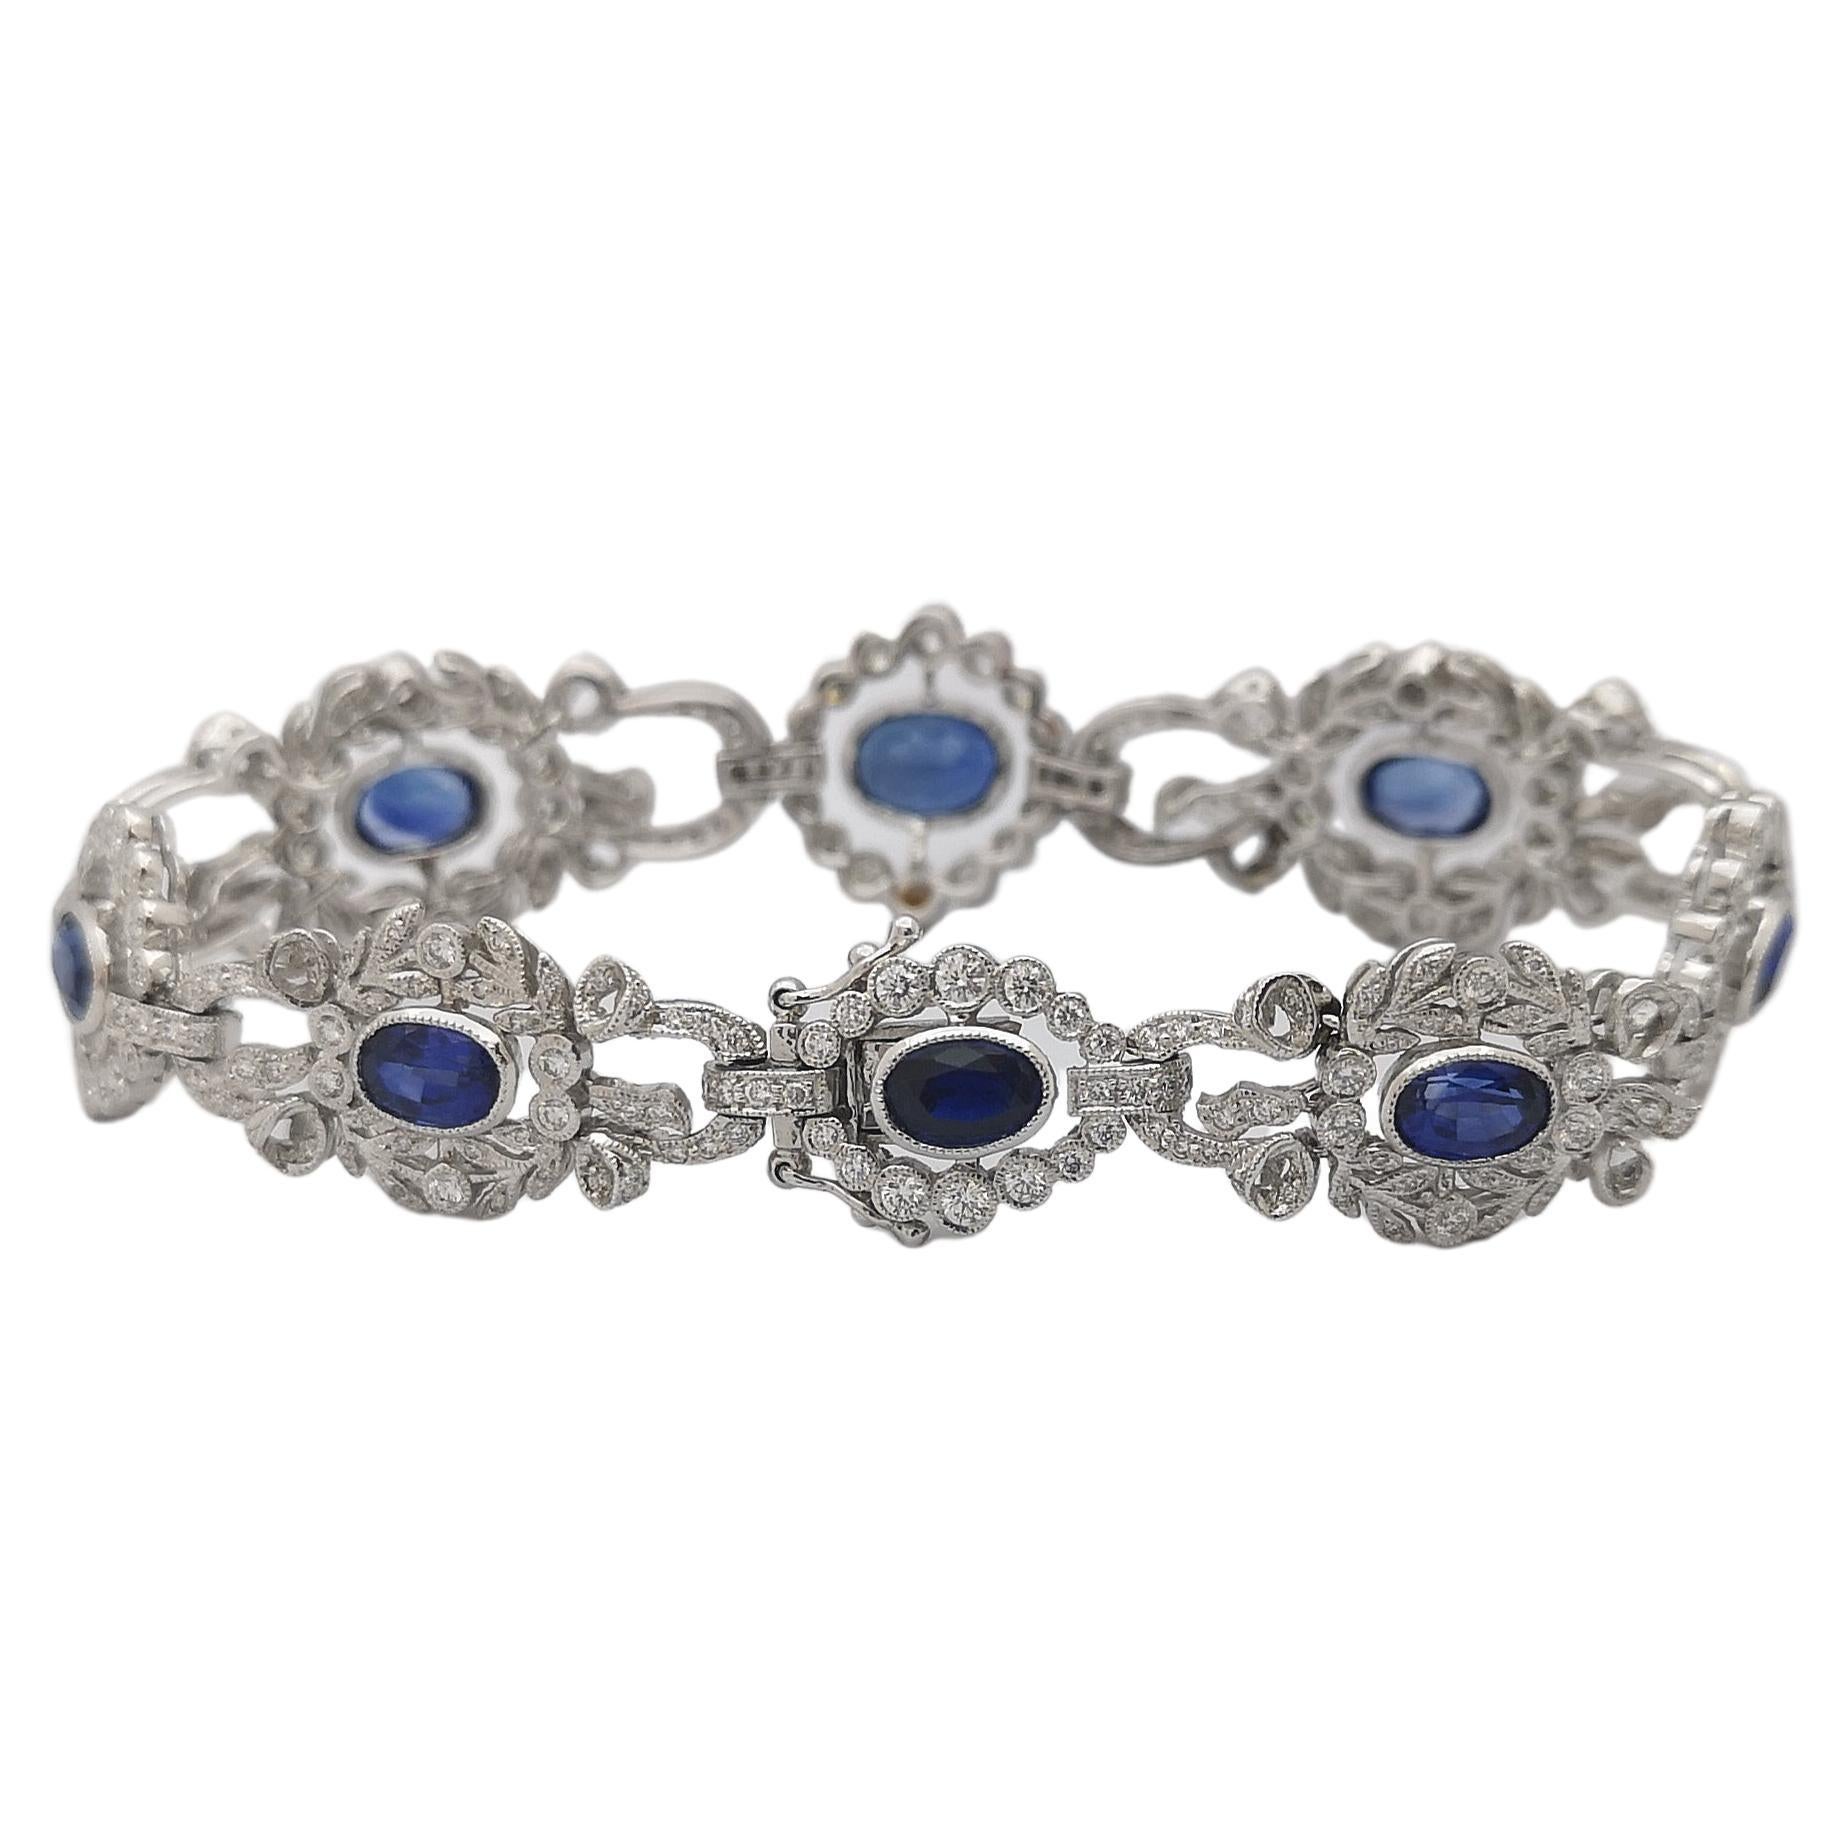  Blue Sapphire with Diamond Bracelet set in 18 Karat White Gold Settings